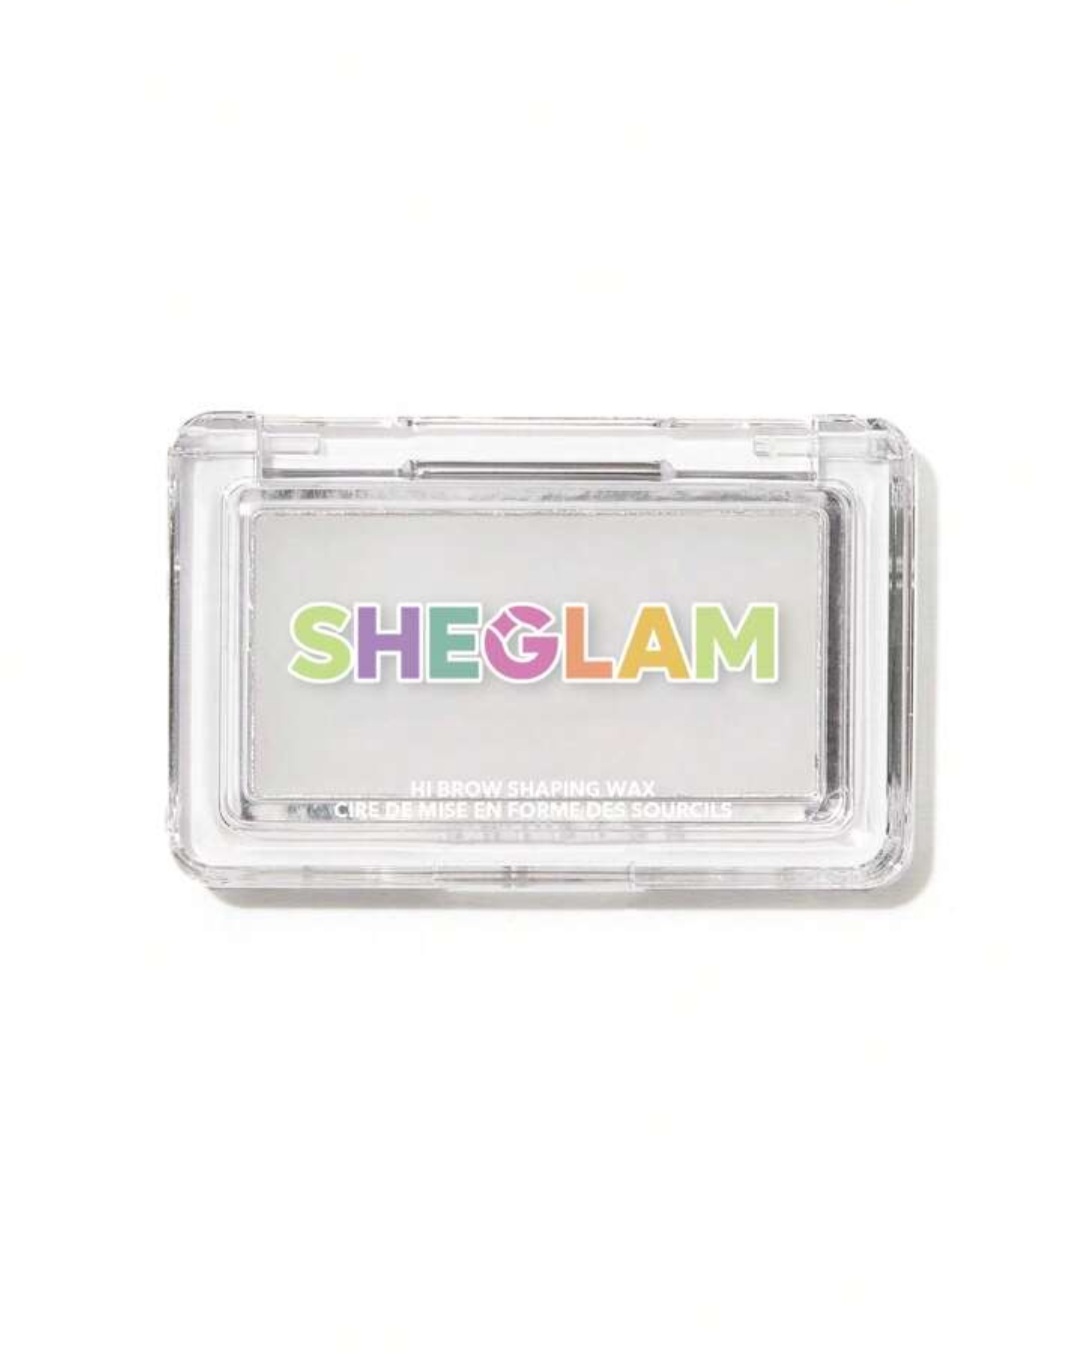 وکس فرم دهنده ی ابرو شیگلم مدل SHEGLAM HI BROW shaping wax